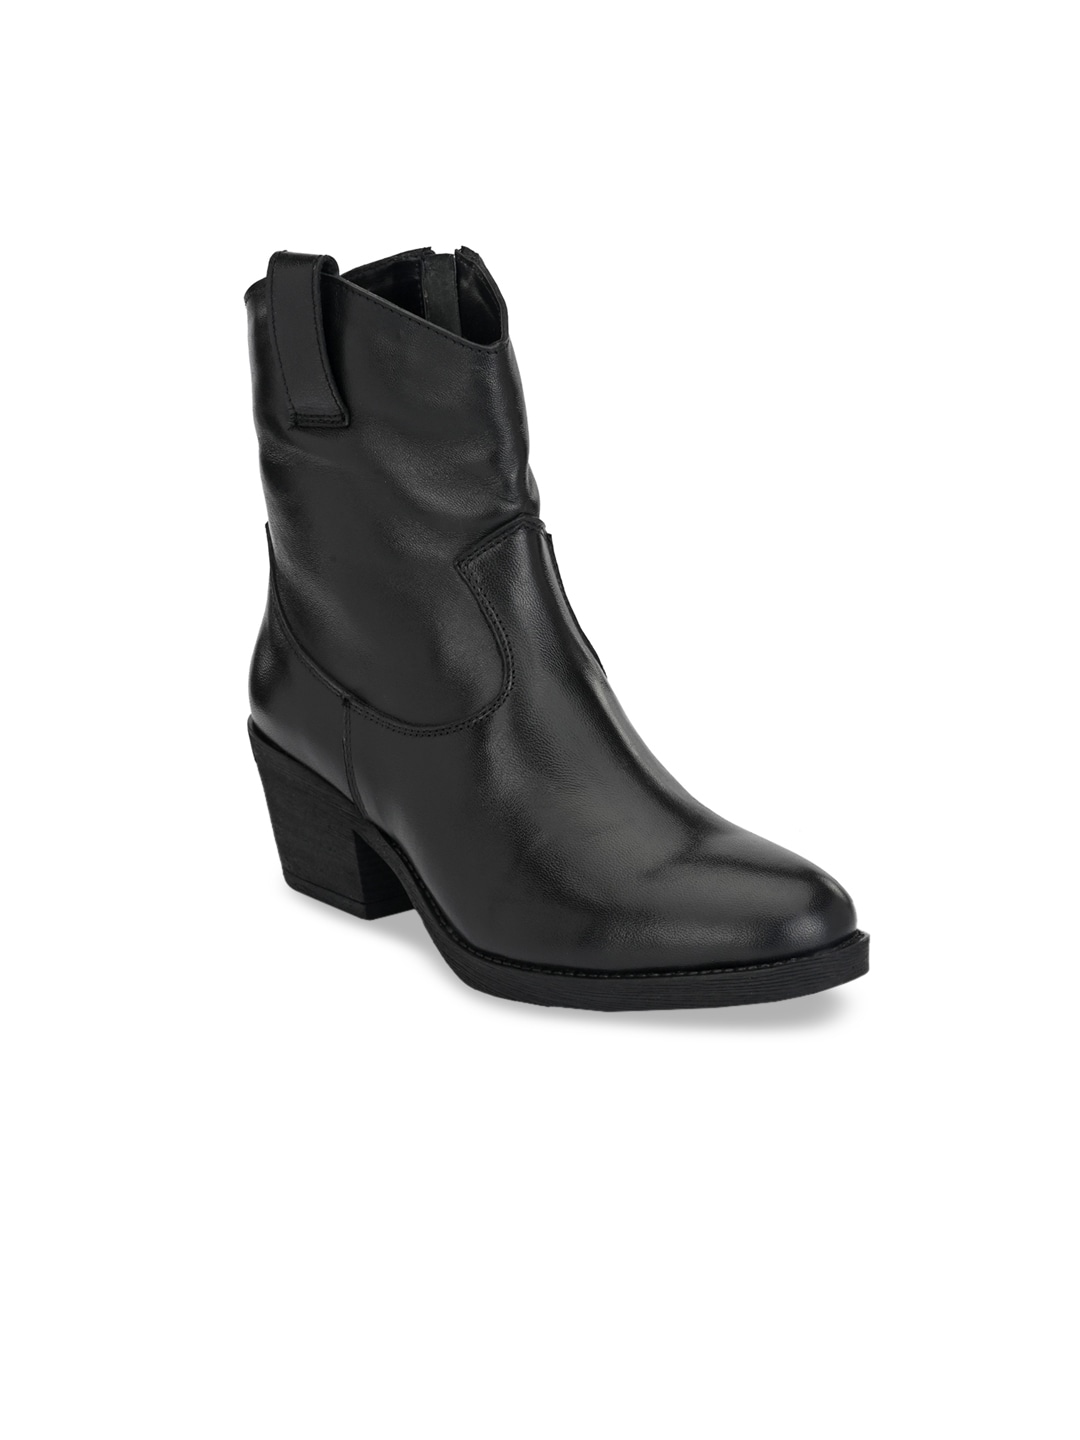 CARLO ROMANO Women Black Flat Boots Price in India